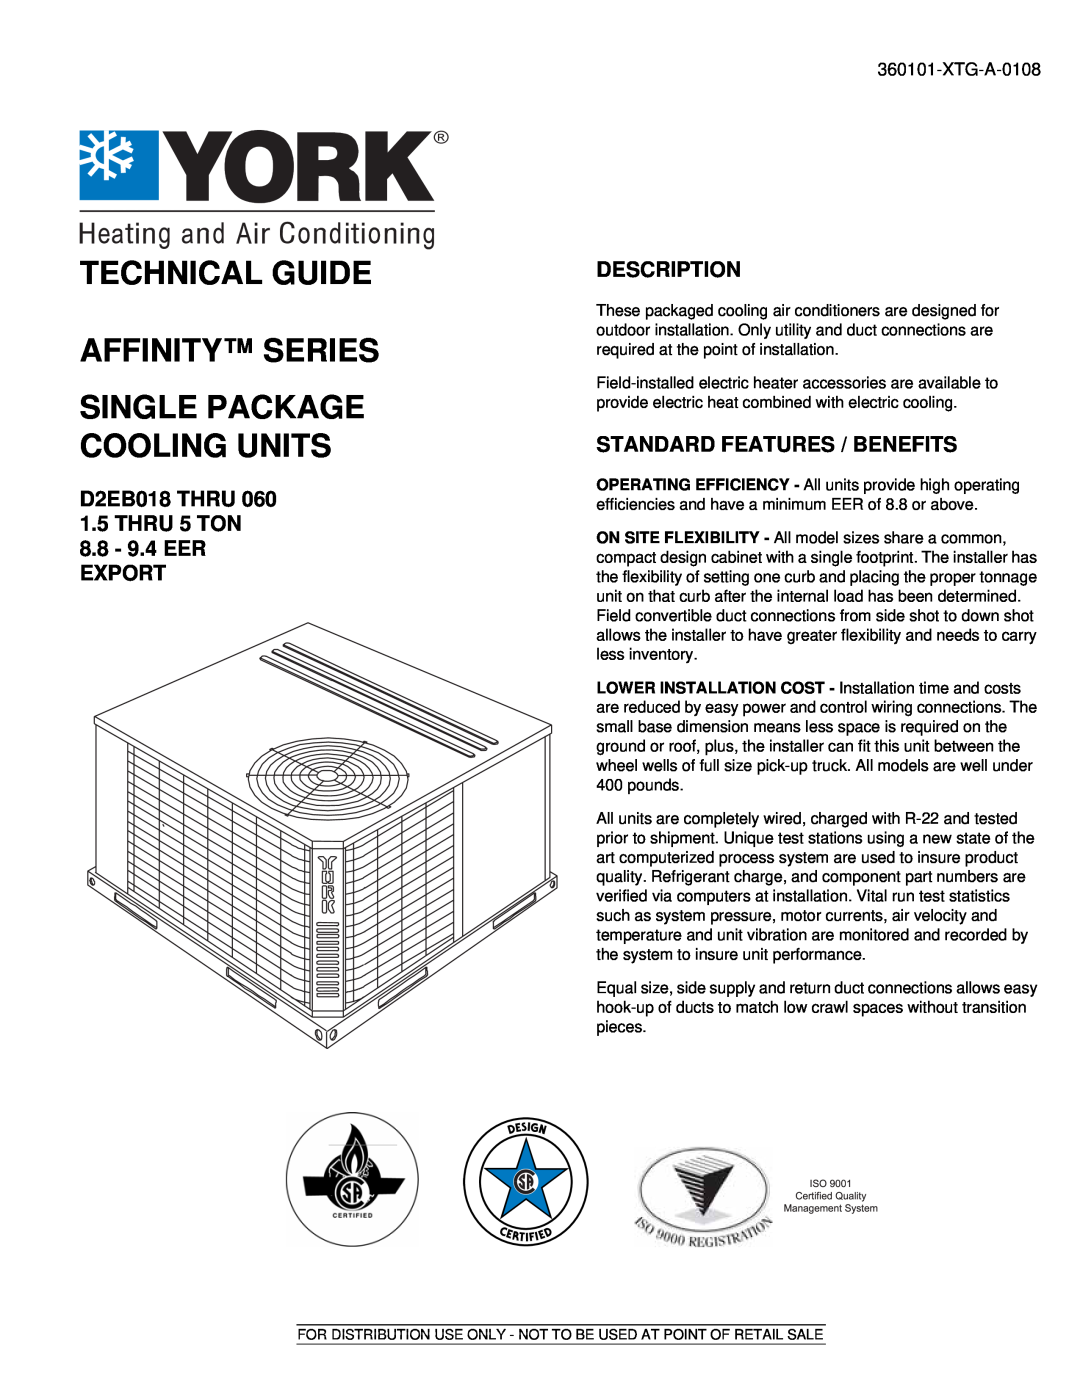 York 360101-XTG-A-0108 manual D2EB018 THRU 1.5THRU 5 TON 8.8- 9.4 EER EXPORT, Description, Standard Features / Benefits 